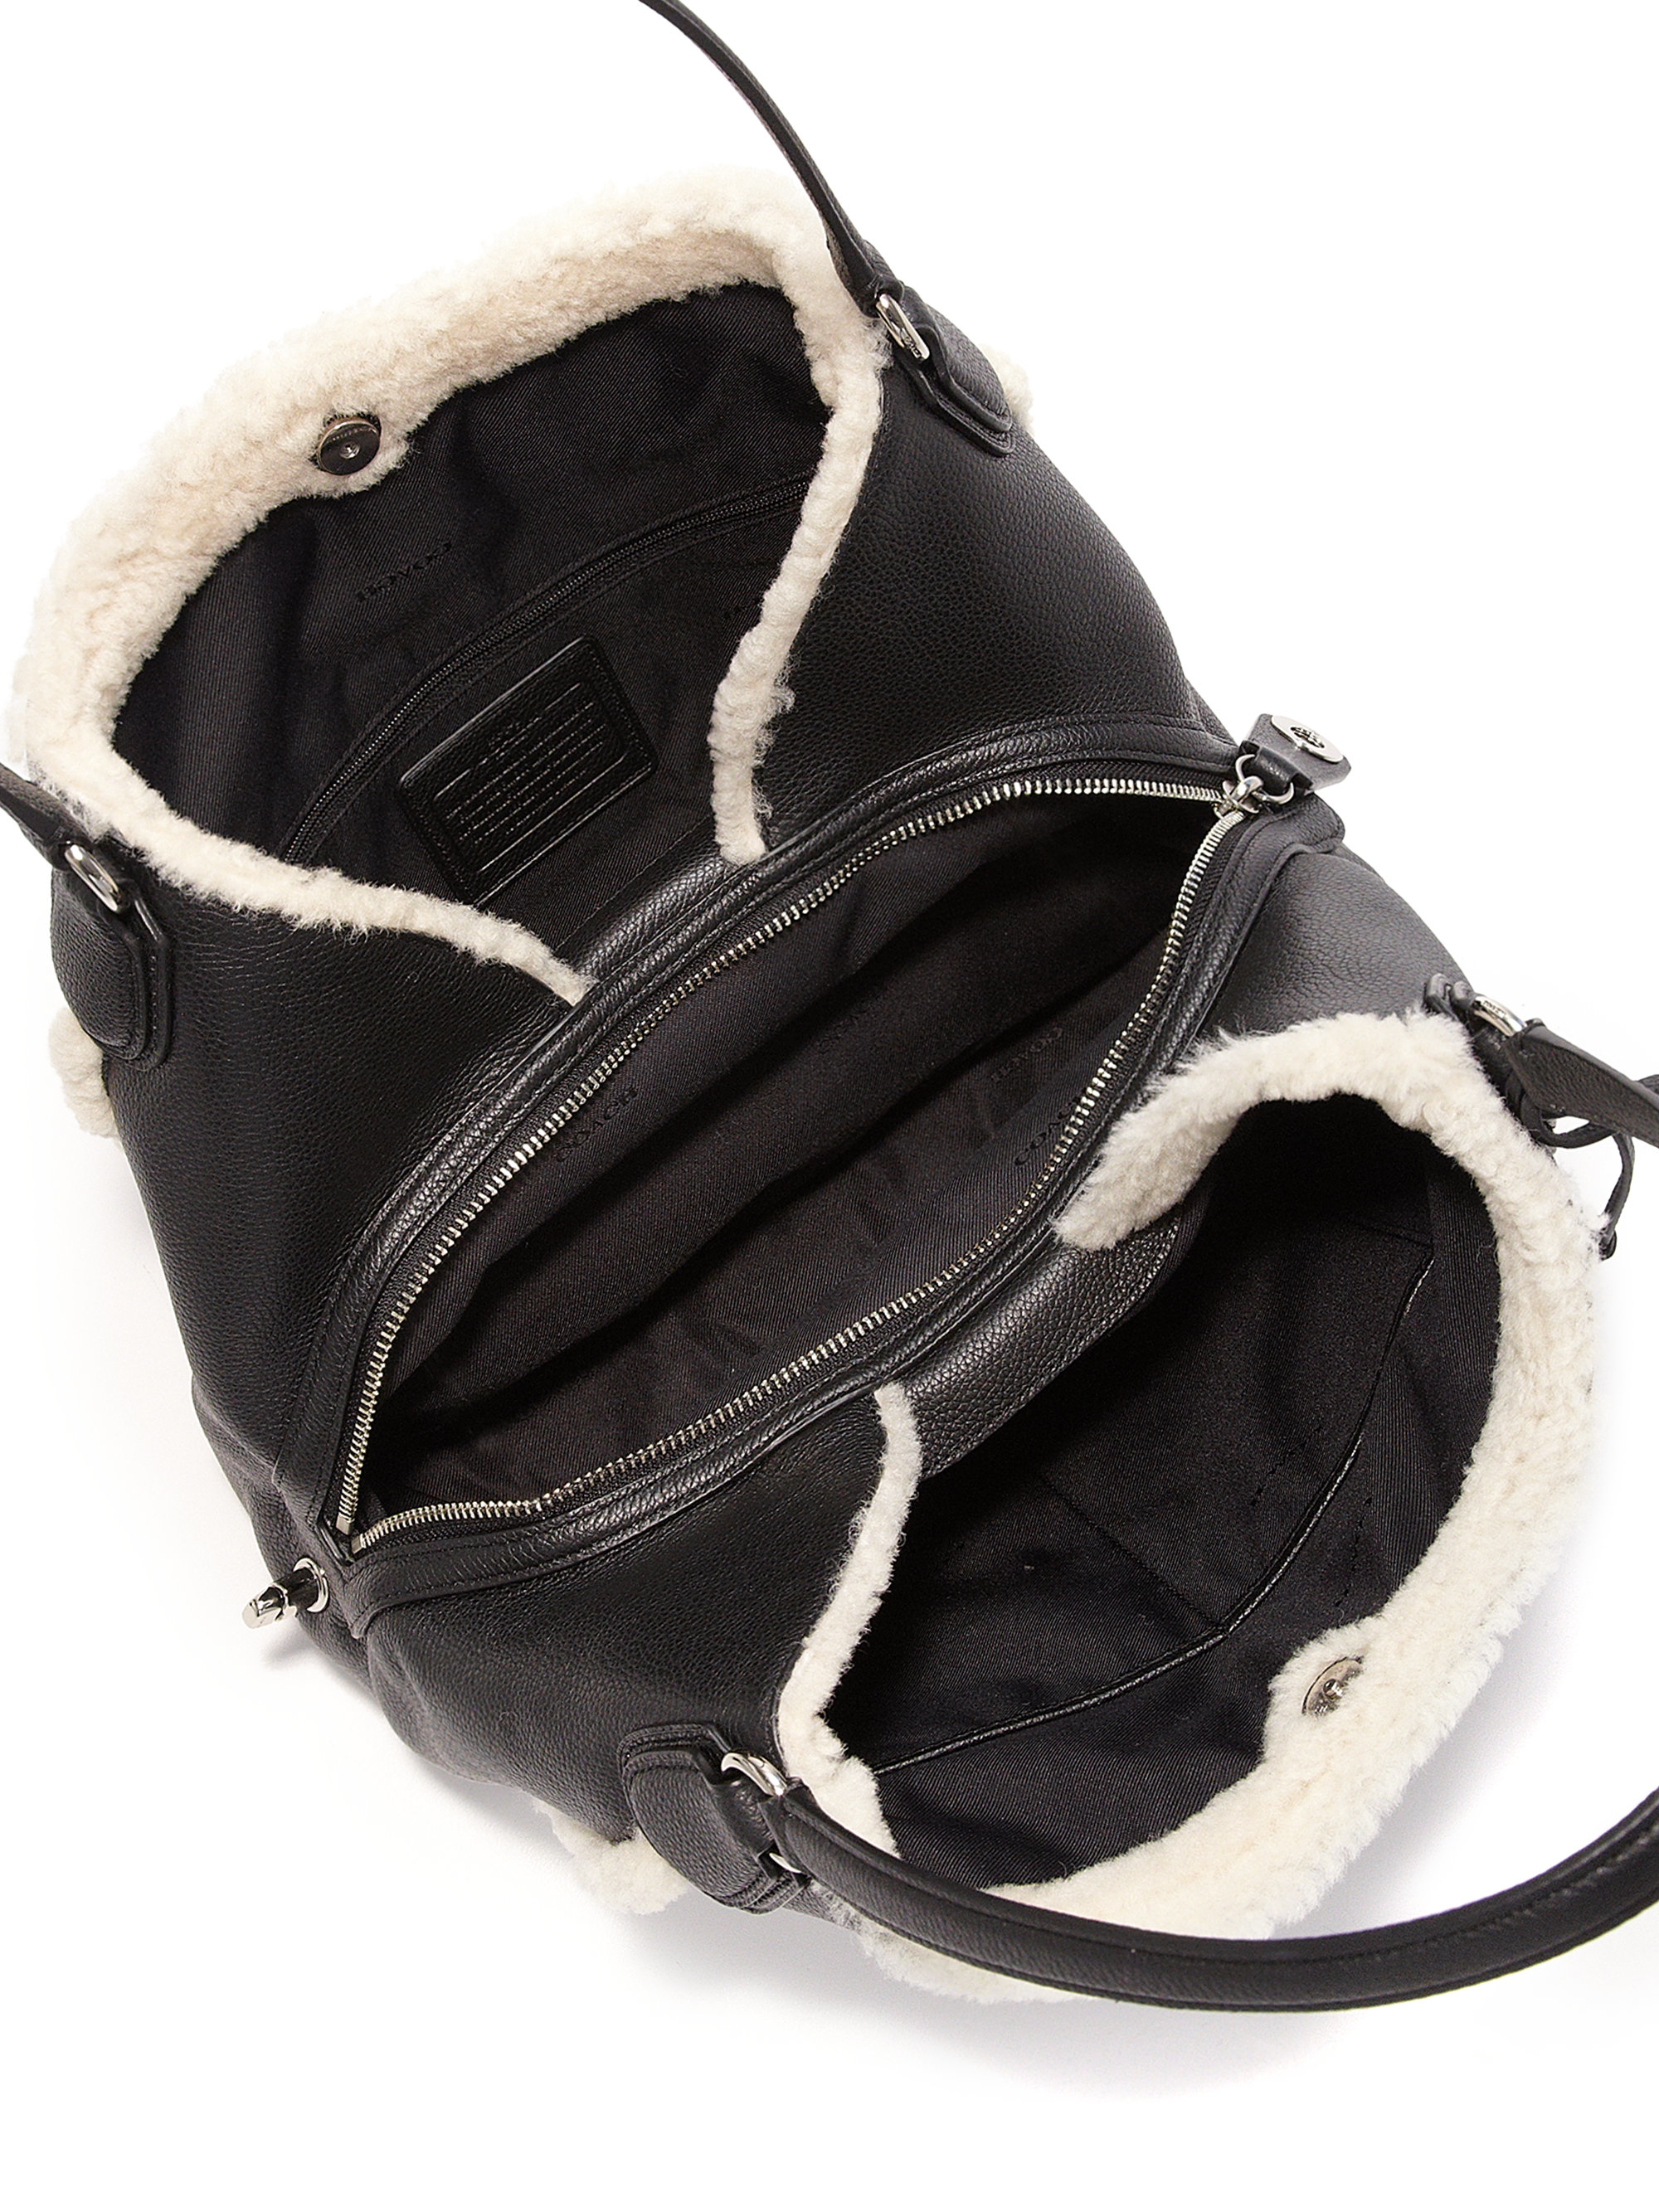 Coach Edie Shearling & Leather Shoulder Bag in Black | Lyst